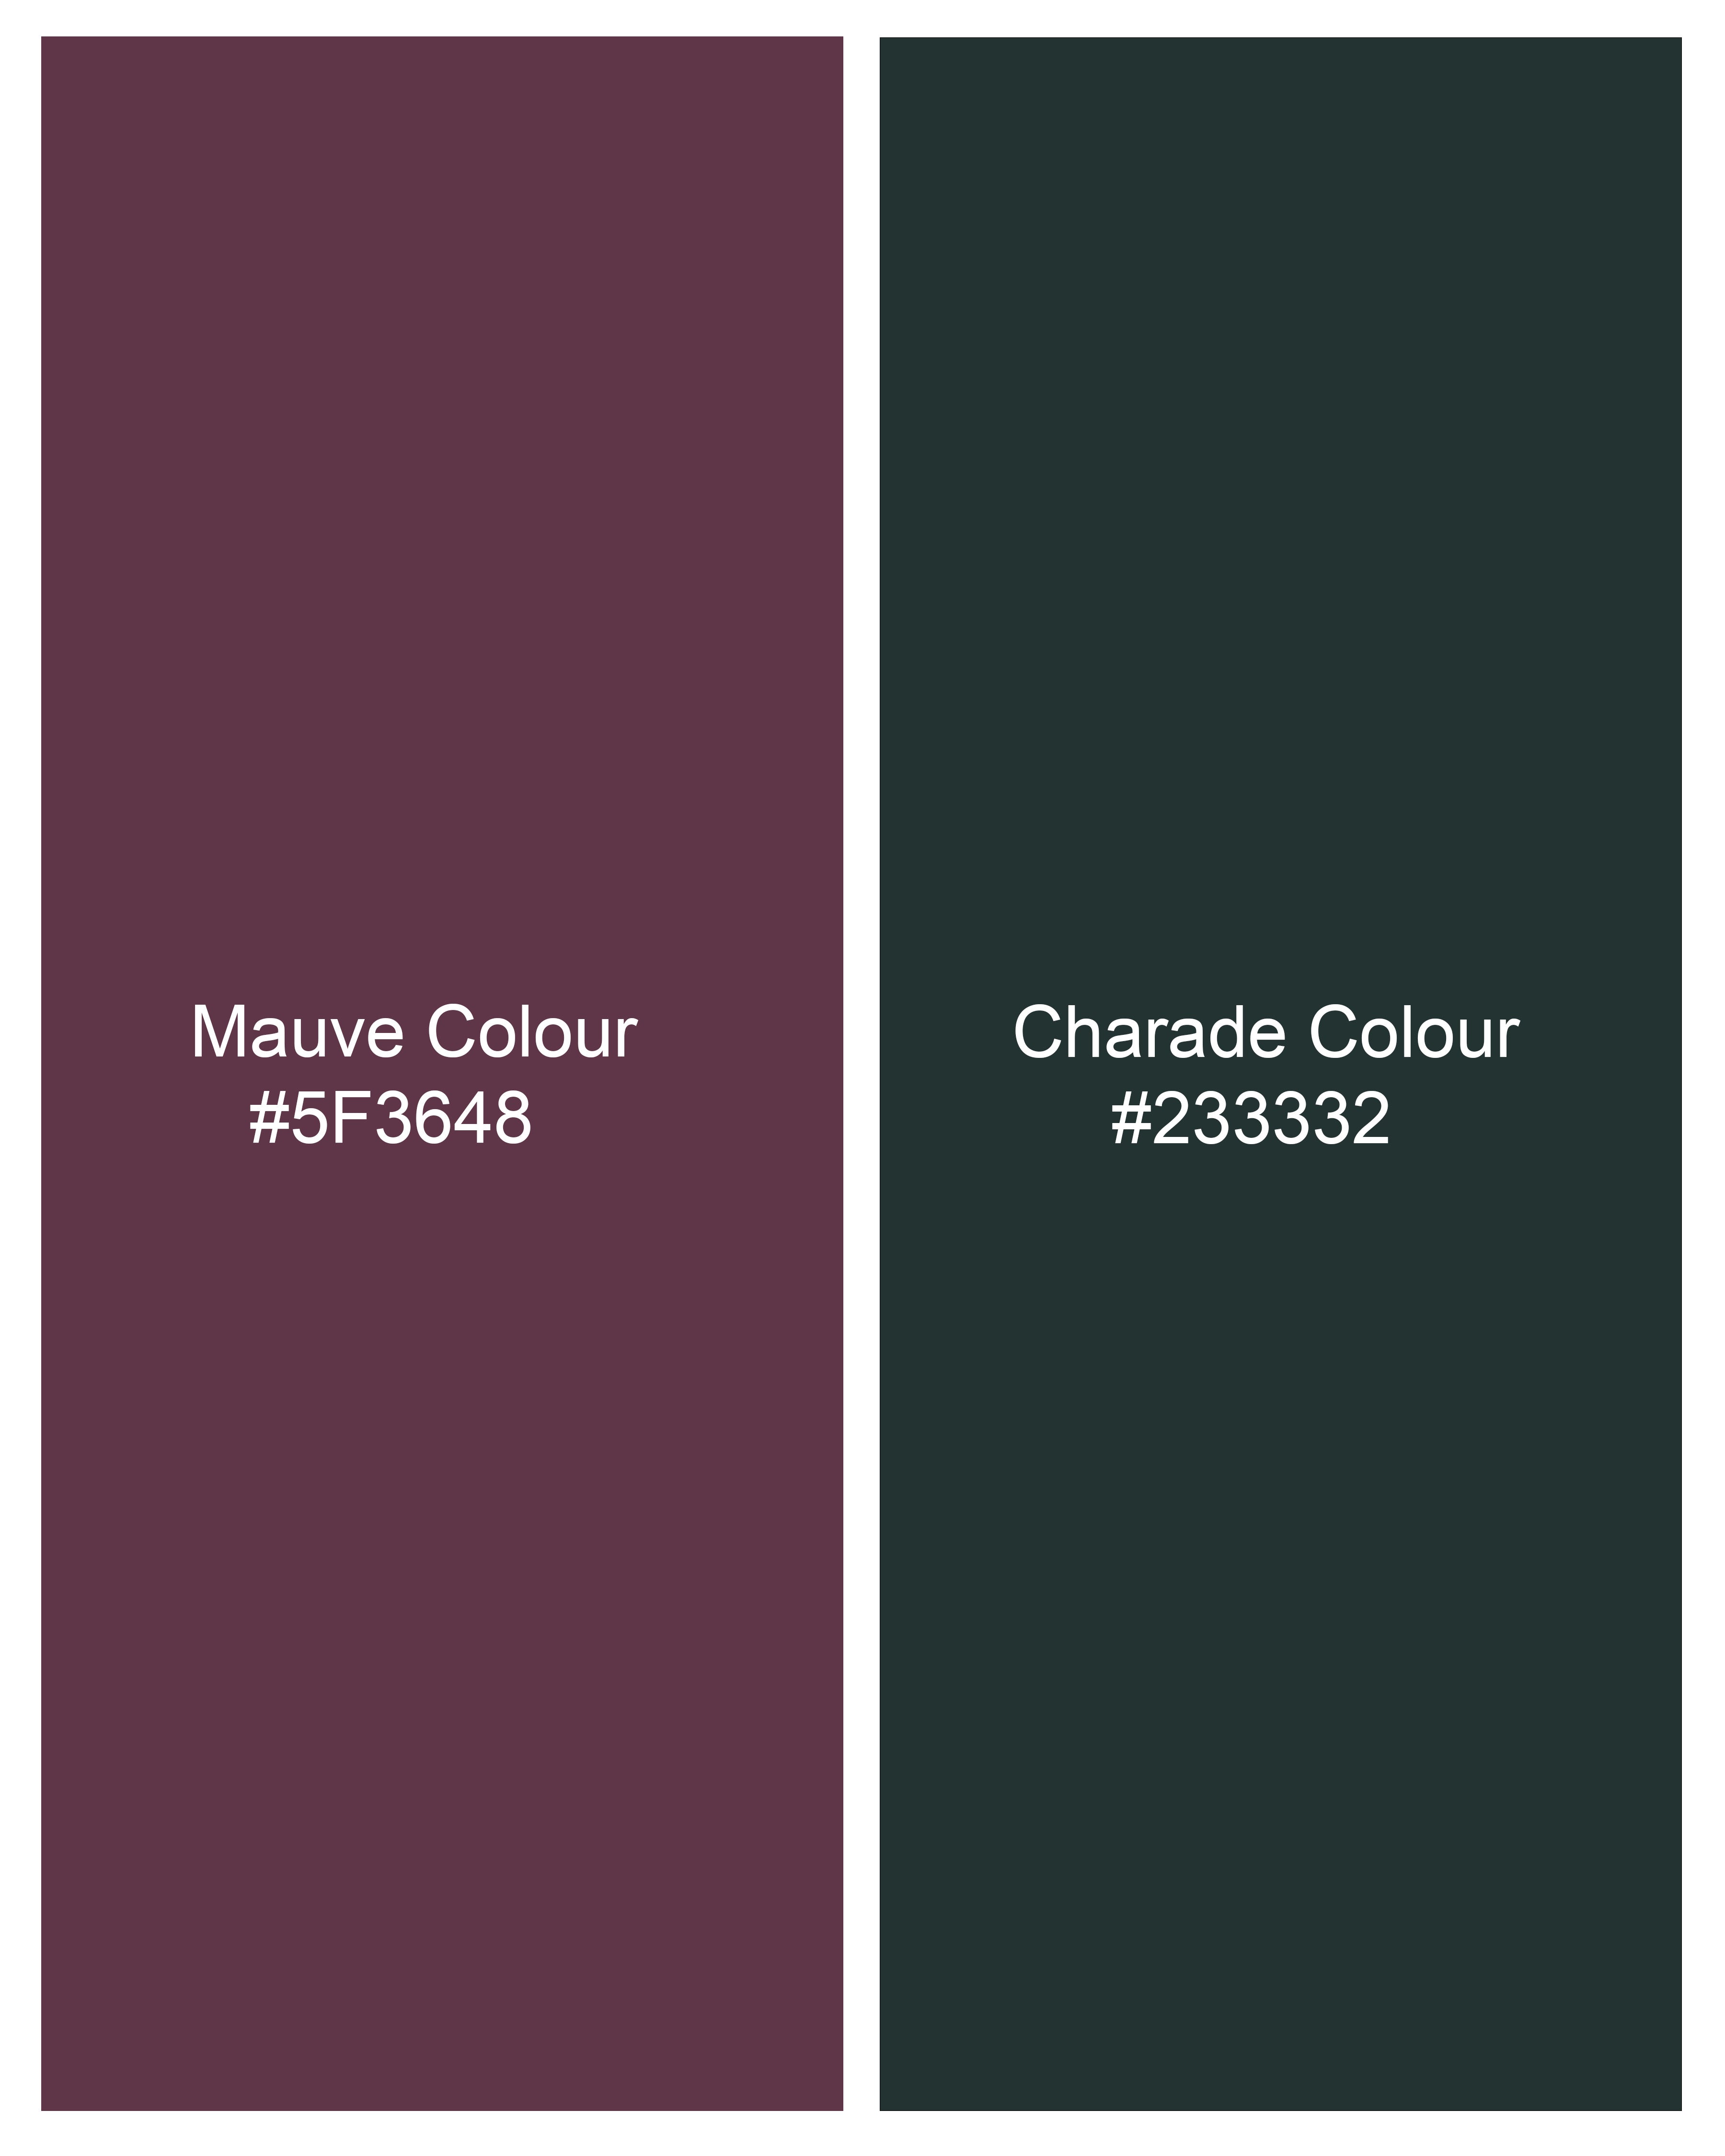 Mauve Wine with Charade Green Jacquard Textured Premium Giza Cotton Shirt 9911-BLE-38, 9911-BLE-H-38, 9911-BLE-39, 9911-BLE-H-39, 9911-BLE-40, 9911-BLE-H-40, 9911-BLE-42, 9911-BLE-H-42, 9911-BLE-44, 9911-BLE-H-44, 9911-BLE-46, 9911-BLE-H-46, 9911-BLE-48, 9911-BLE-H-48, 9911-BLE-50, 9911-BLE-H-50, 9911-BLE-52, 9911-BLE-H-52